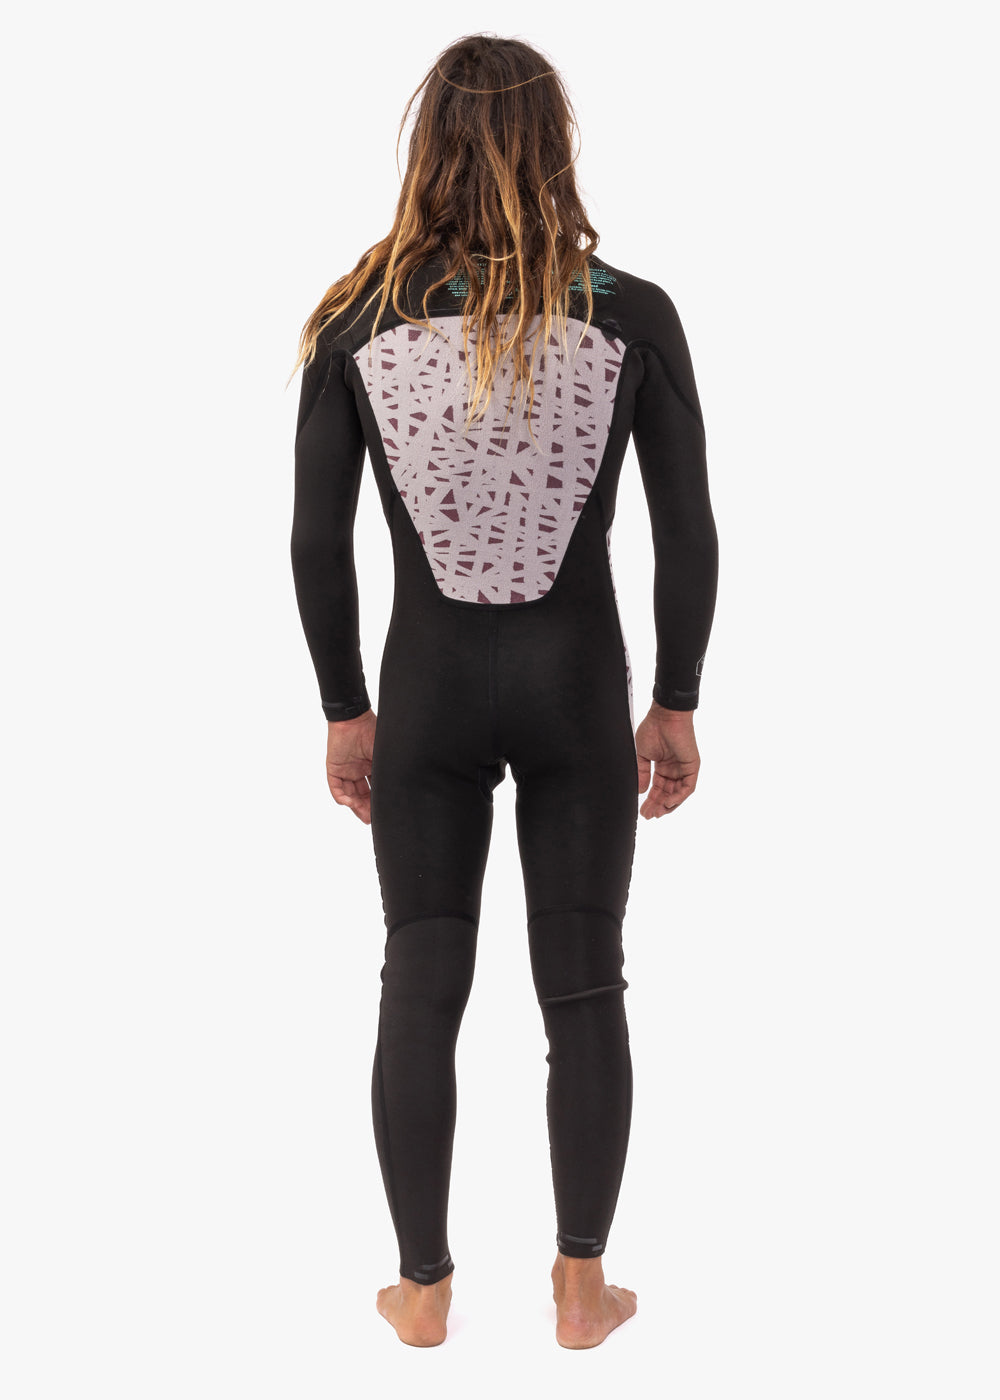 7 Seas 3-2 Full Chest Zip Wetsuit - Black with Jade Logos